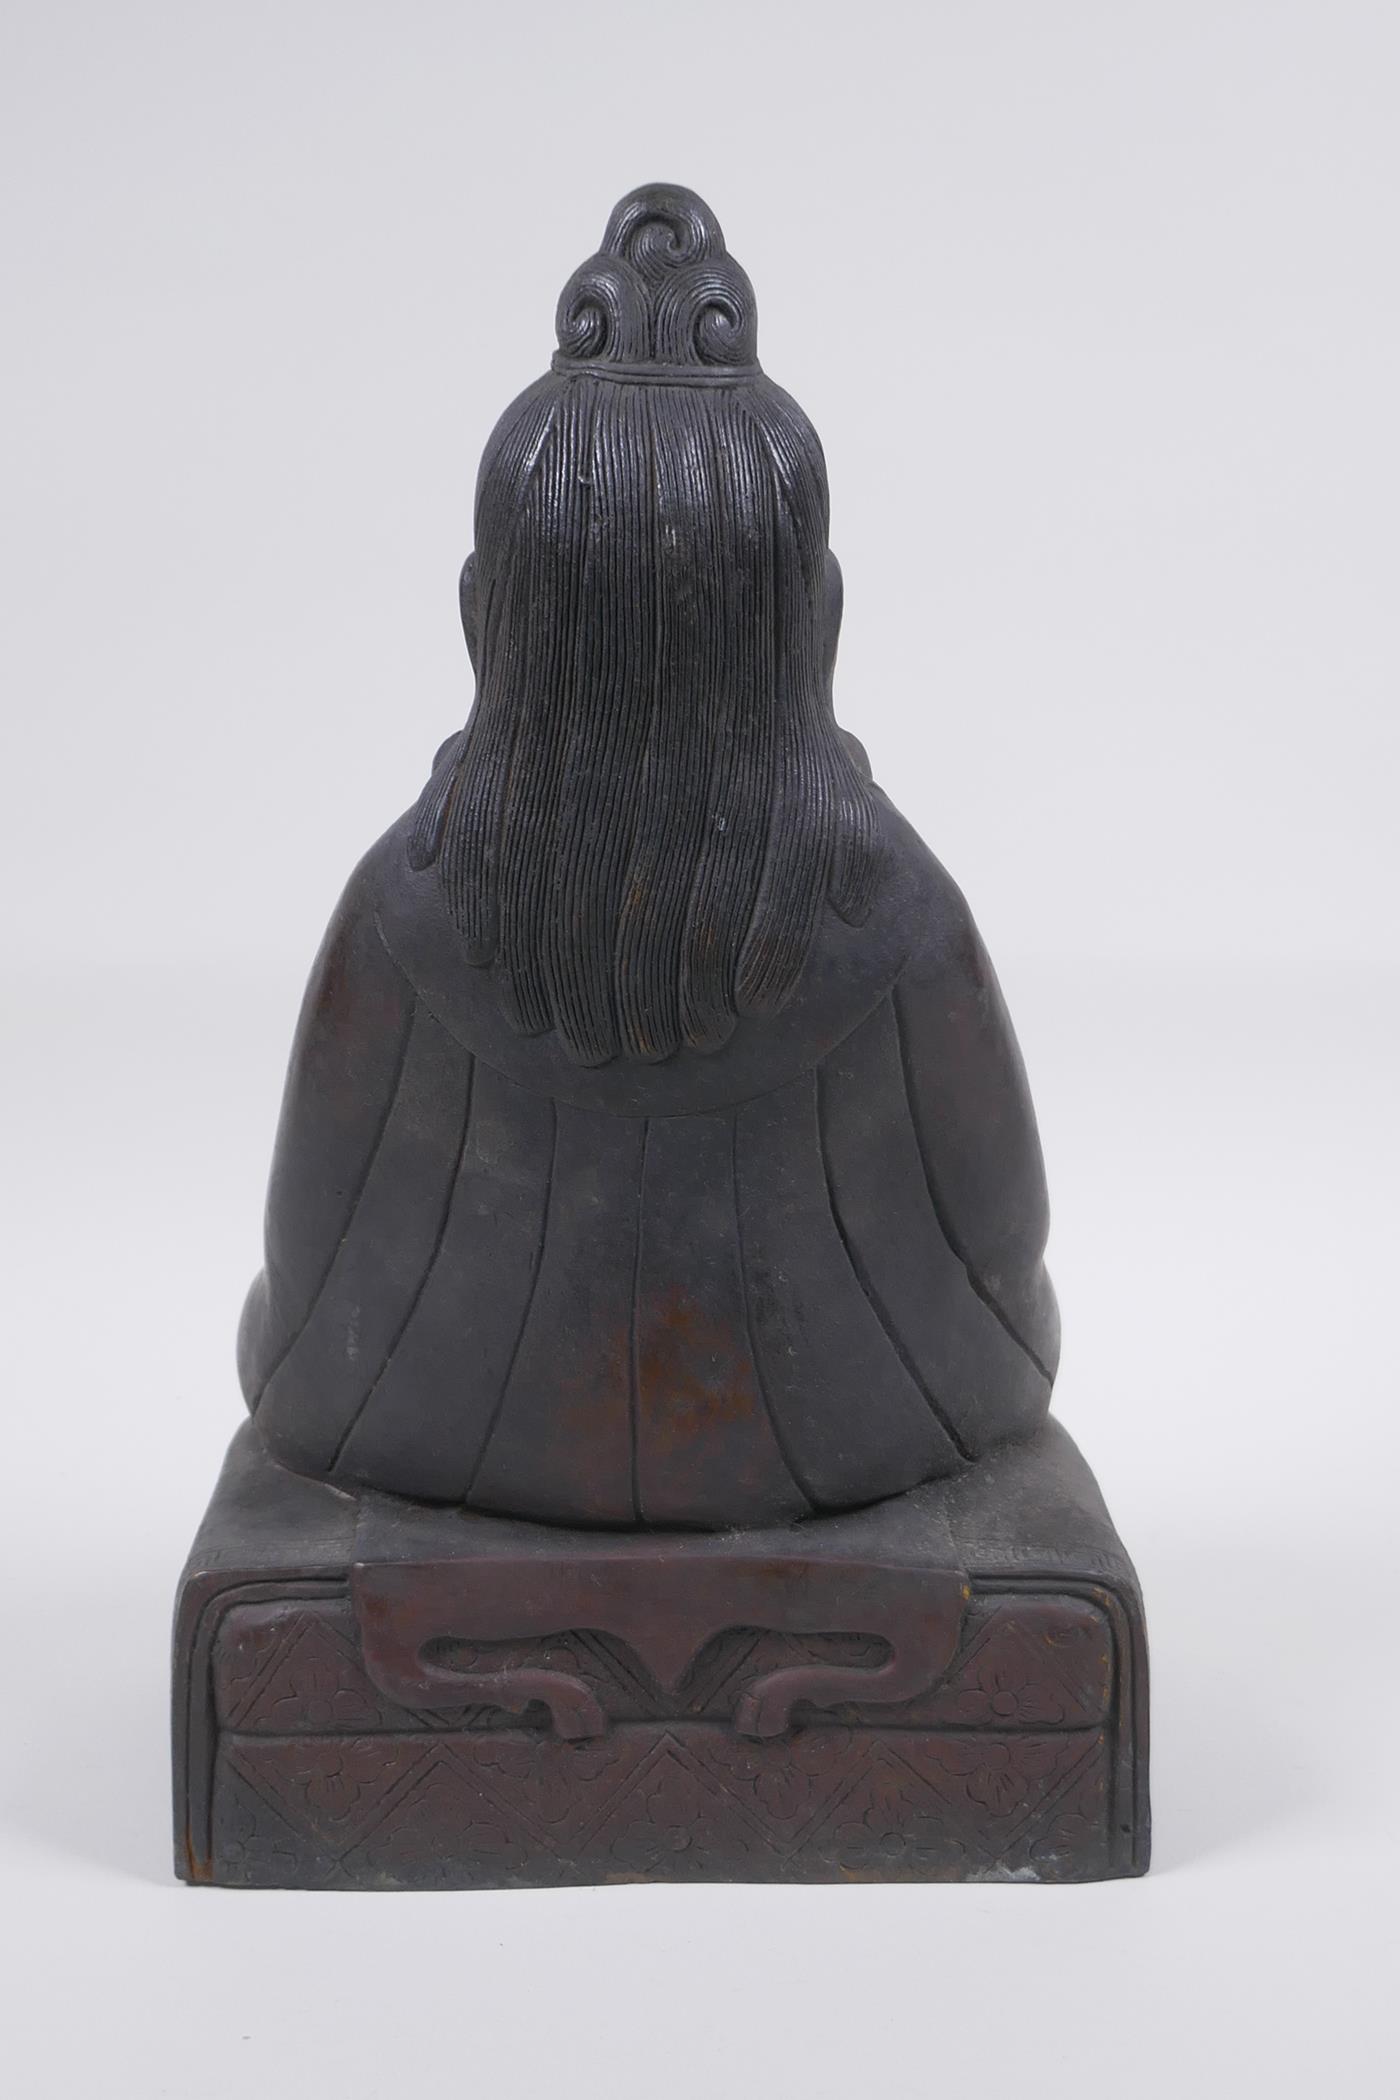 A Sino Tibetan bronze figure of a bearded deity seated in meditation, 29cm high - Image 4 of 6